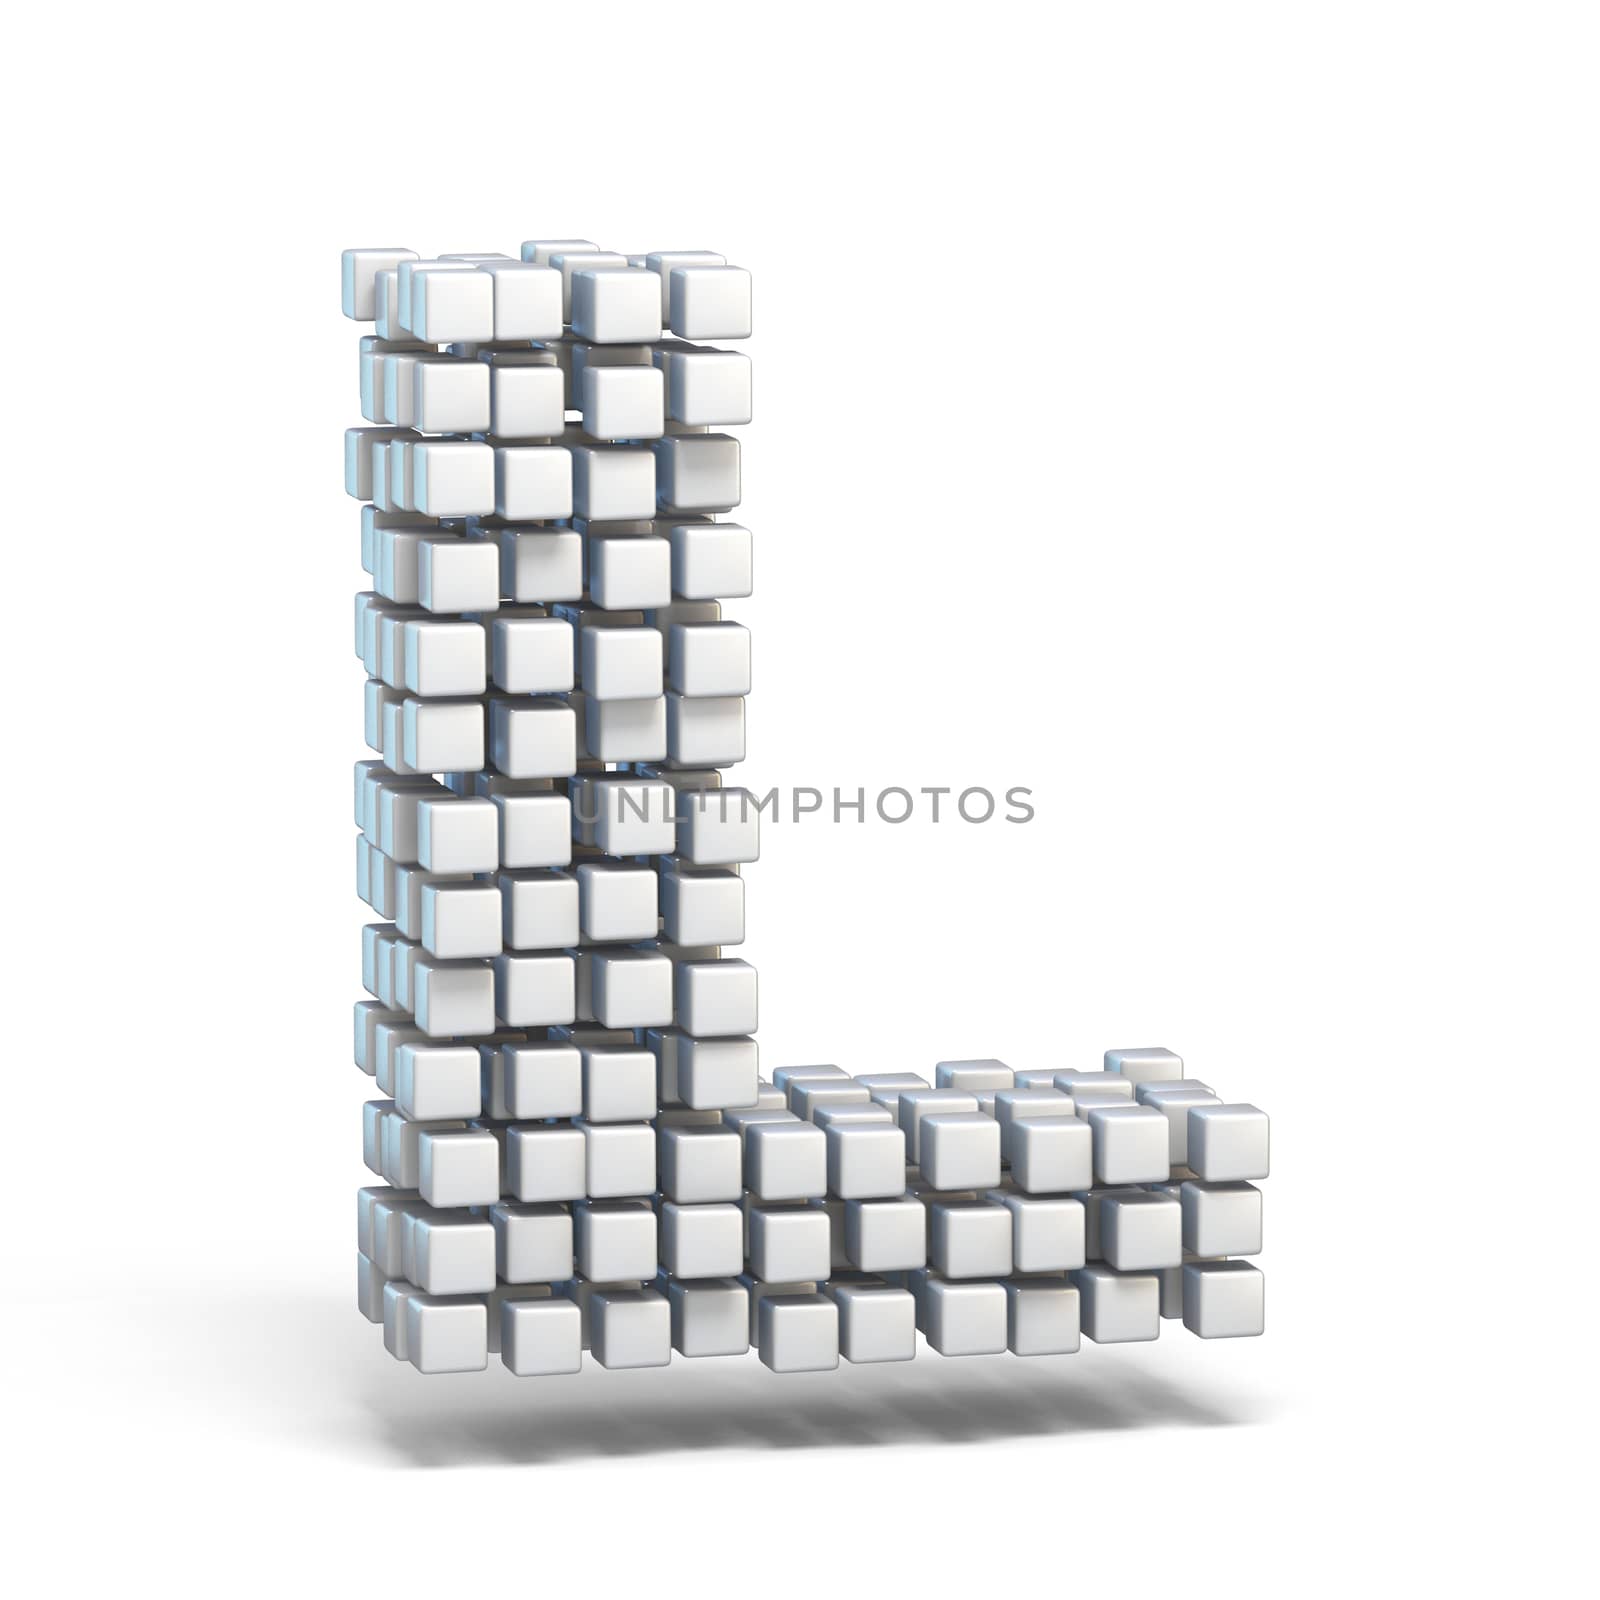 White voxel cubes font Letter L 3D render illustration isolated on white background